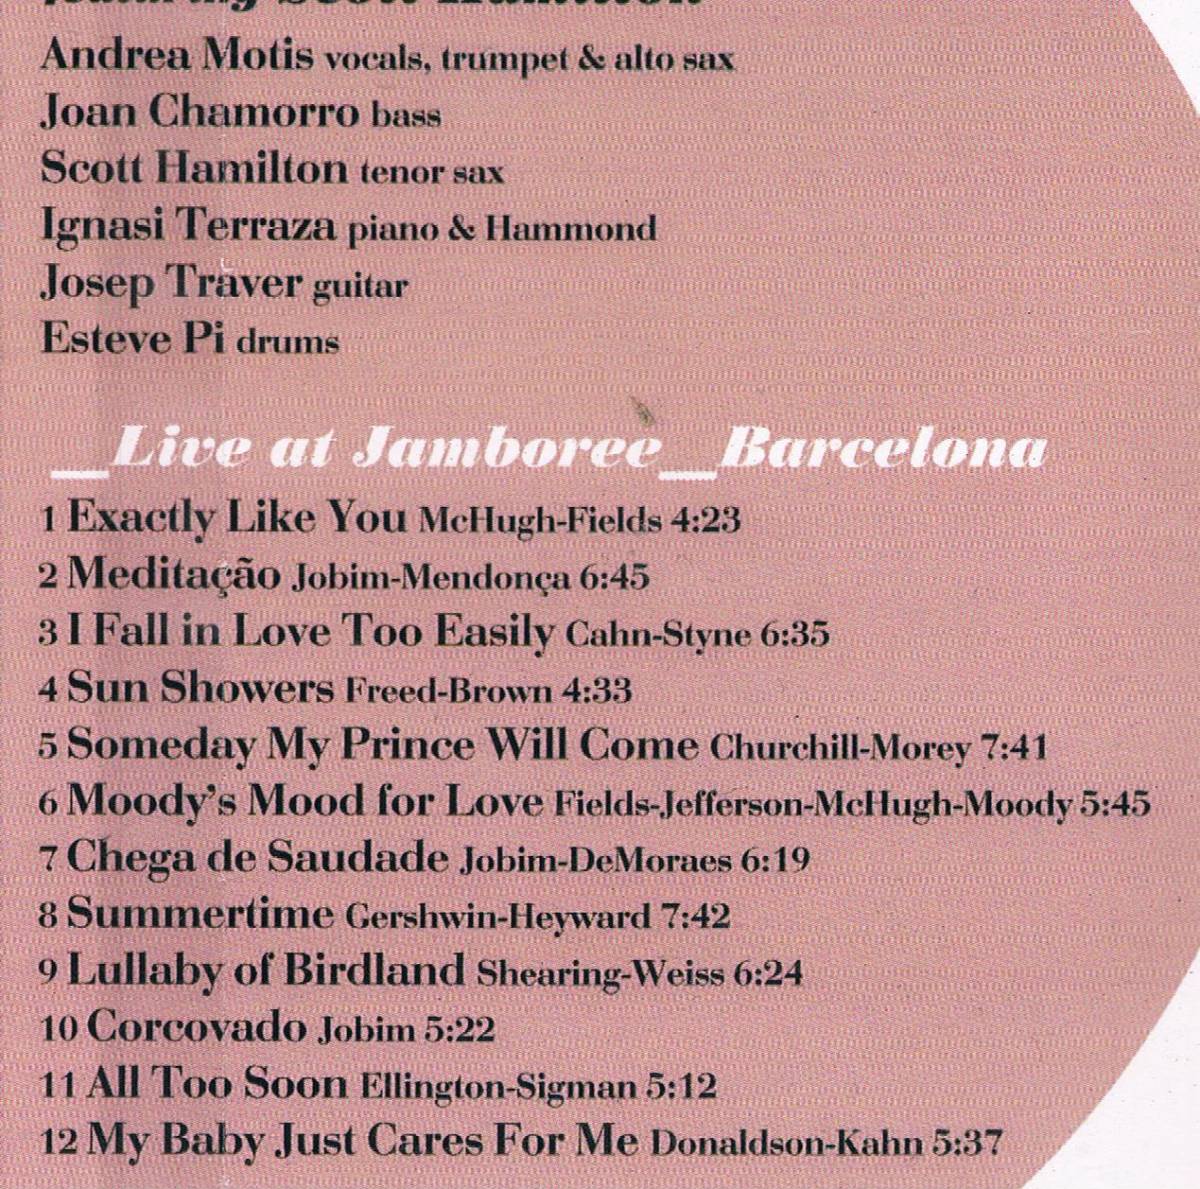  paper jacket *CD+DVD(PAL)* Andre a*motisAndrea Motis & Joan Chamorro feat. Scott Hamilton/Live at Jamboree Barcelona